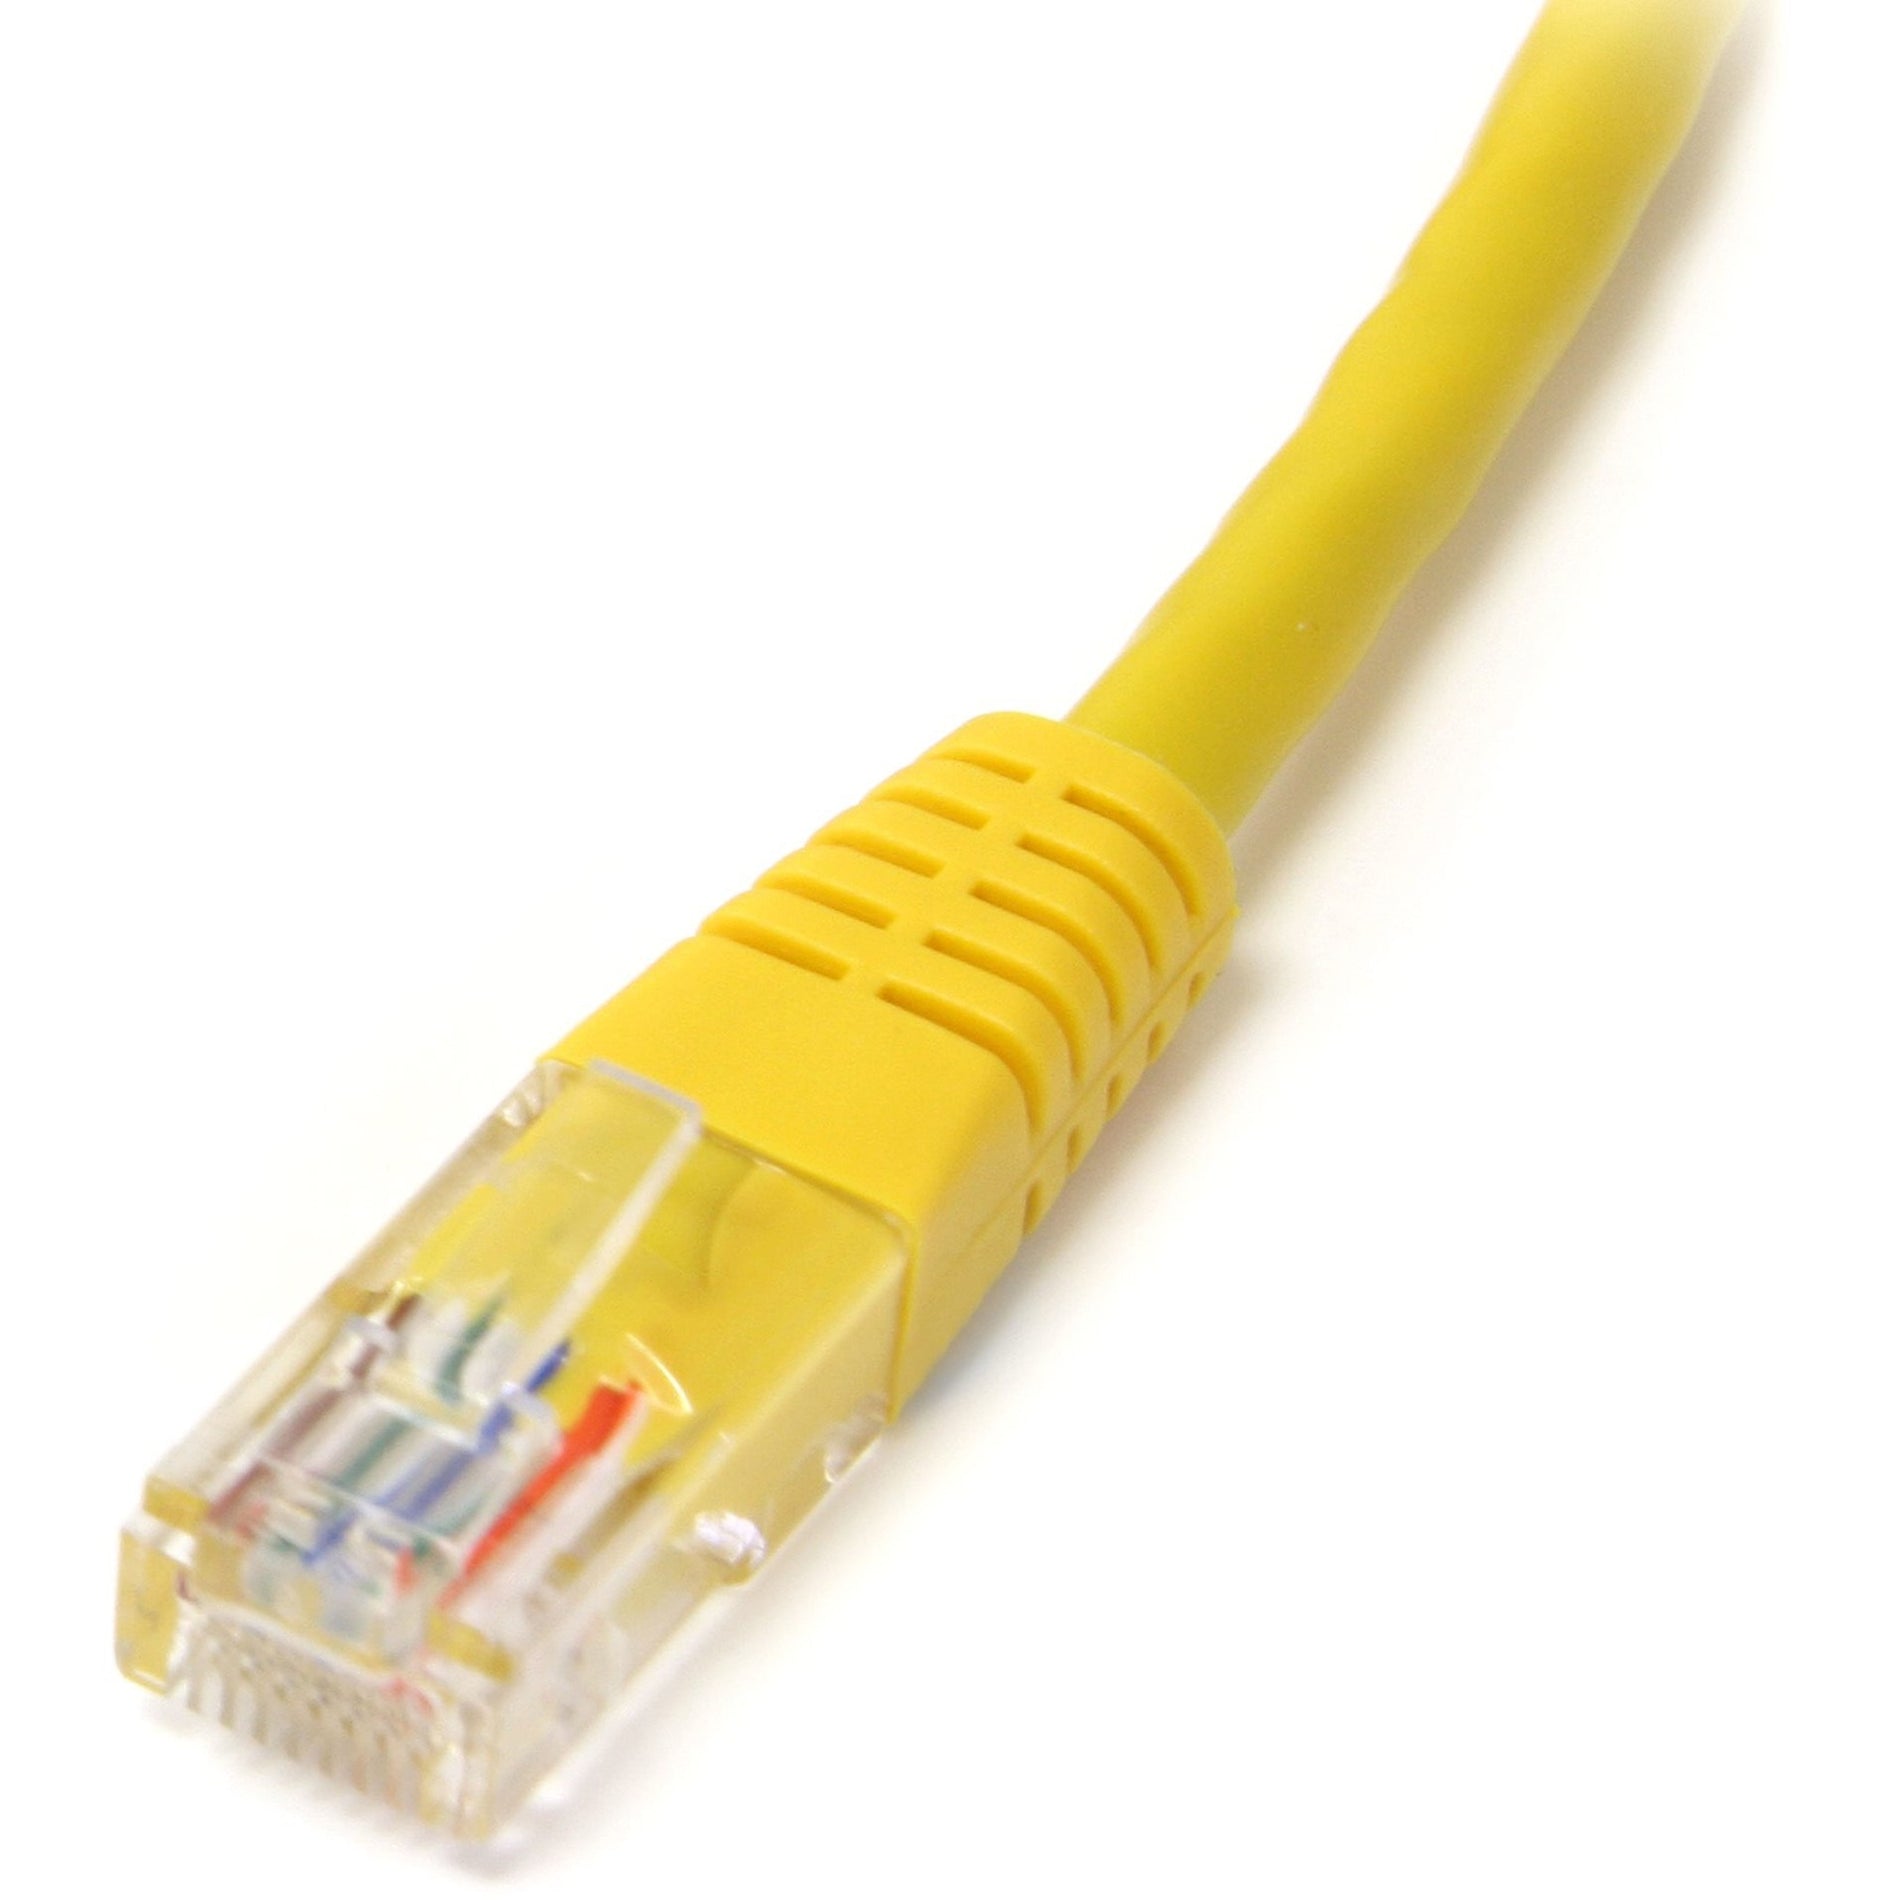 StarTech.com M45PATCH2YL Cat. 5E UTP Patch Cable, 2 ft Yellow, Lifetime Warranty